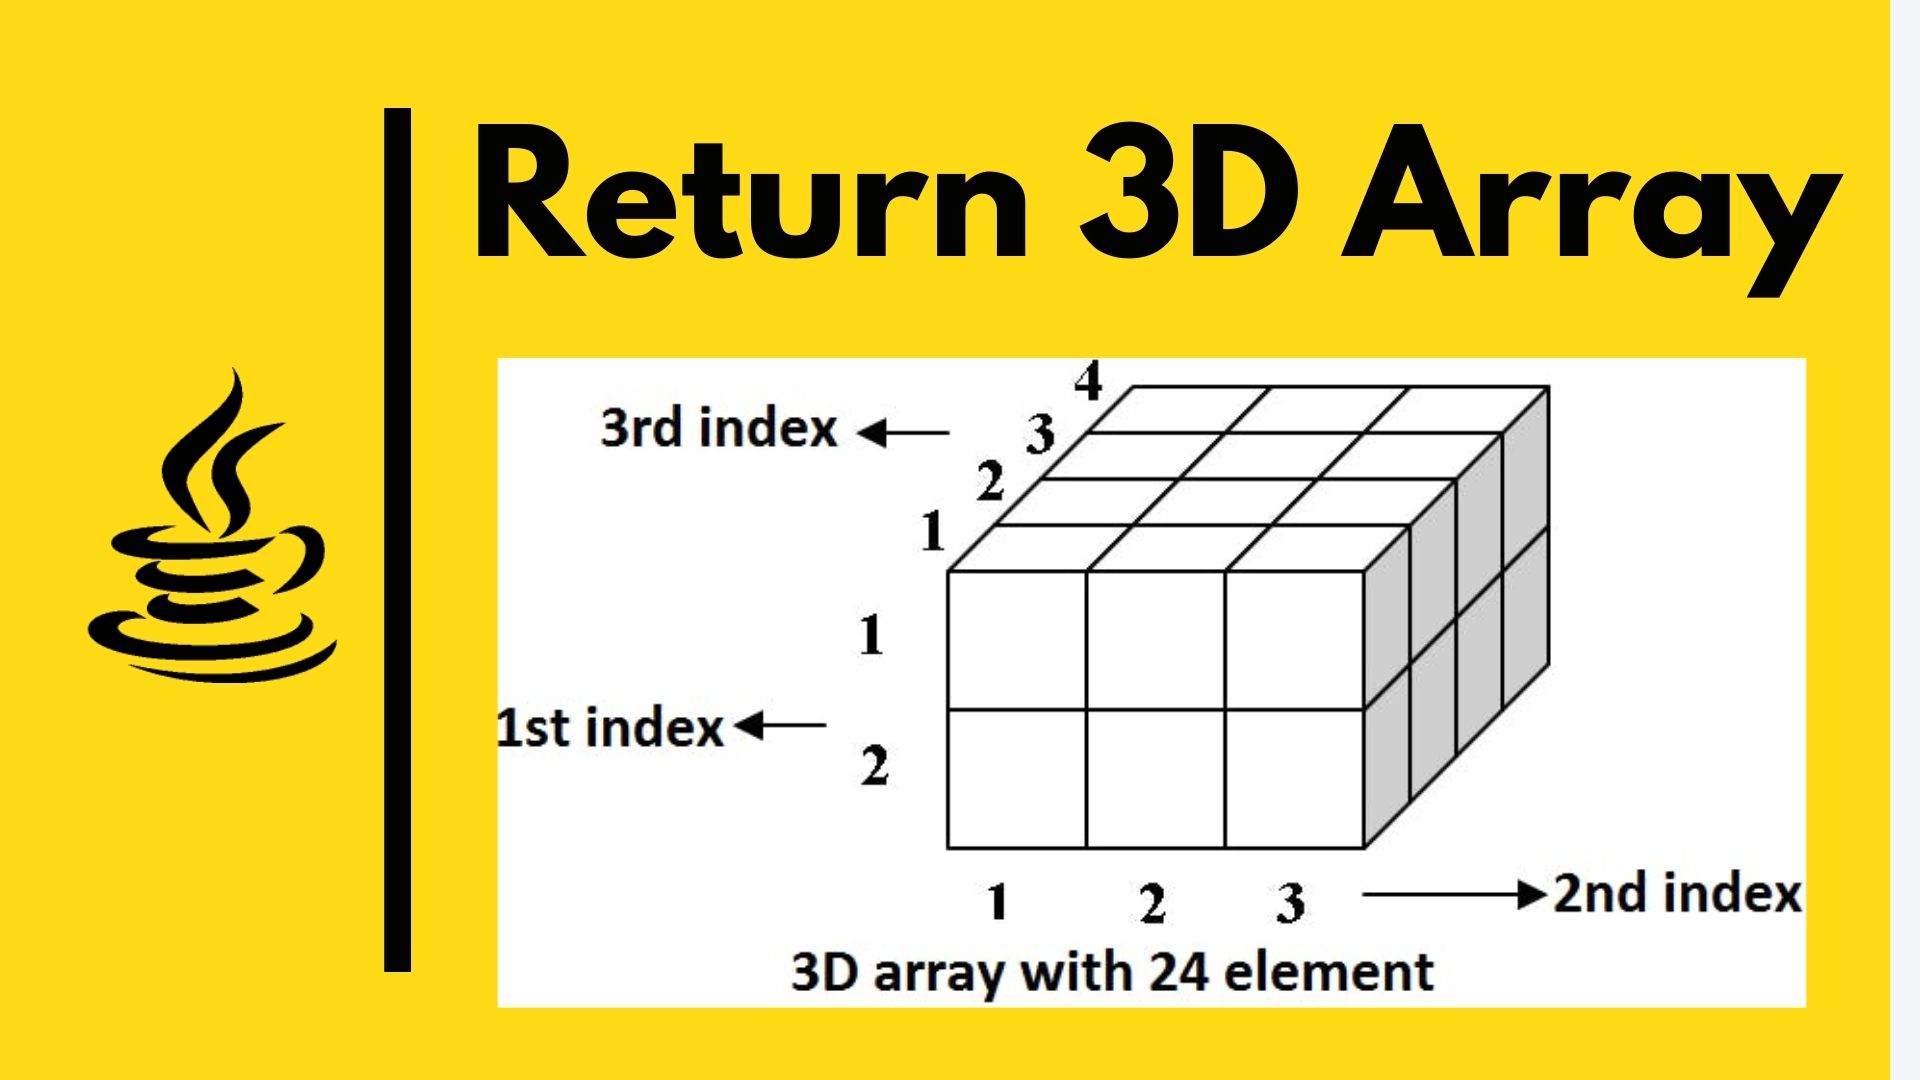 Return a 3D array from a method